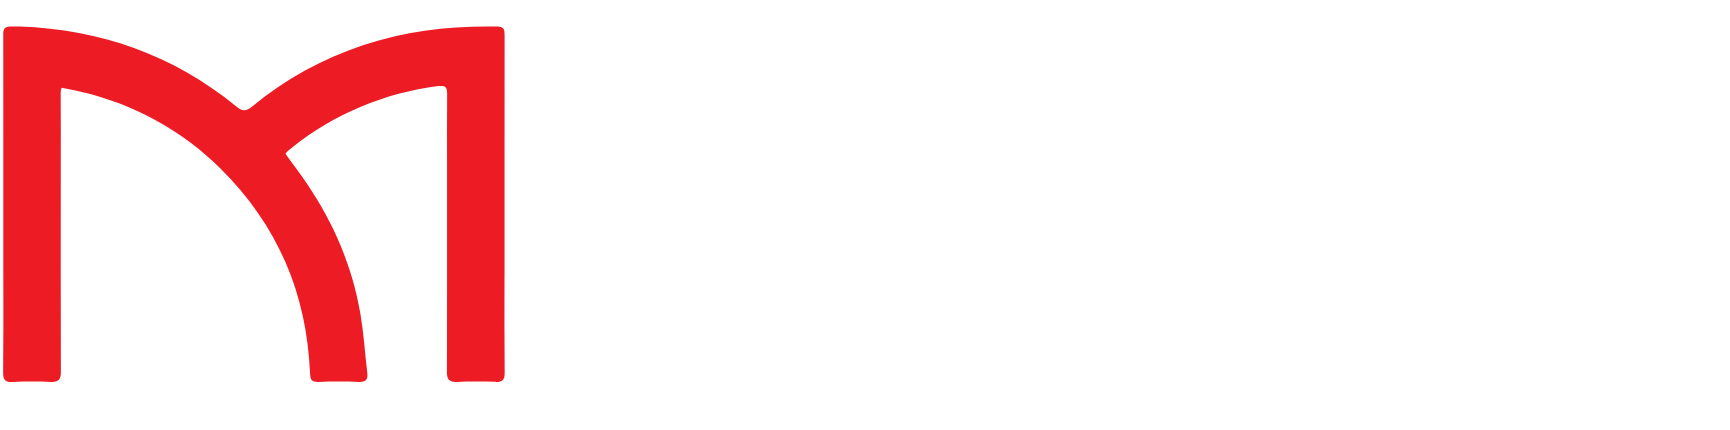 Wireless Masters